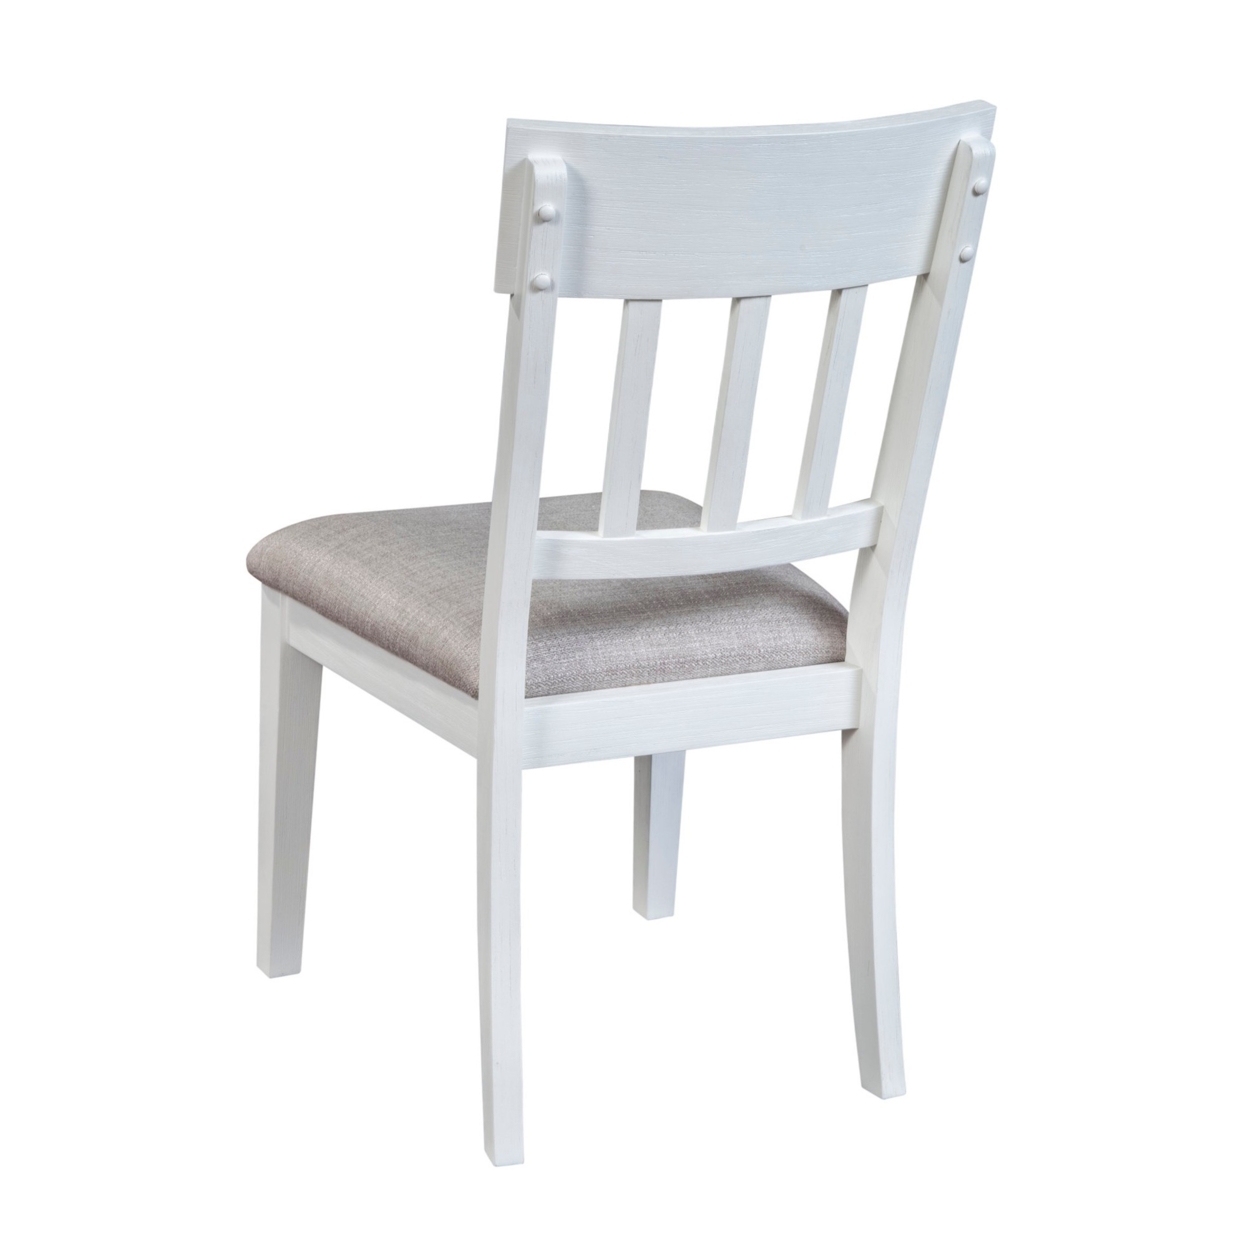 Dan 25 Inch Dining Side Chair, Slatted Back, Gray Cushion, Set Of 2, White- Saltoro Sherpi